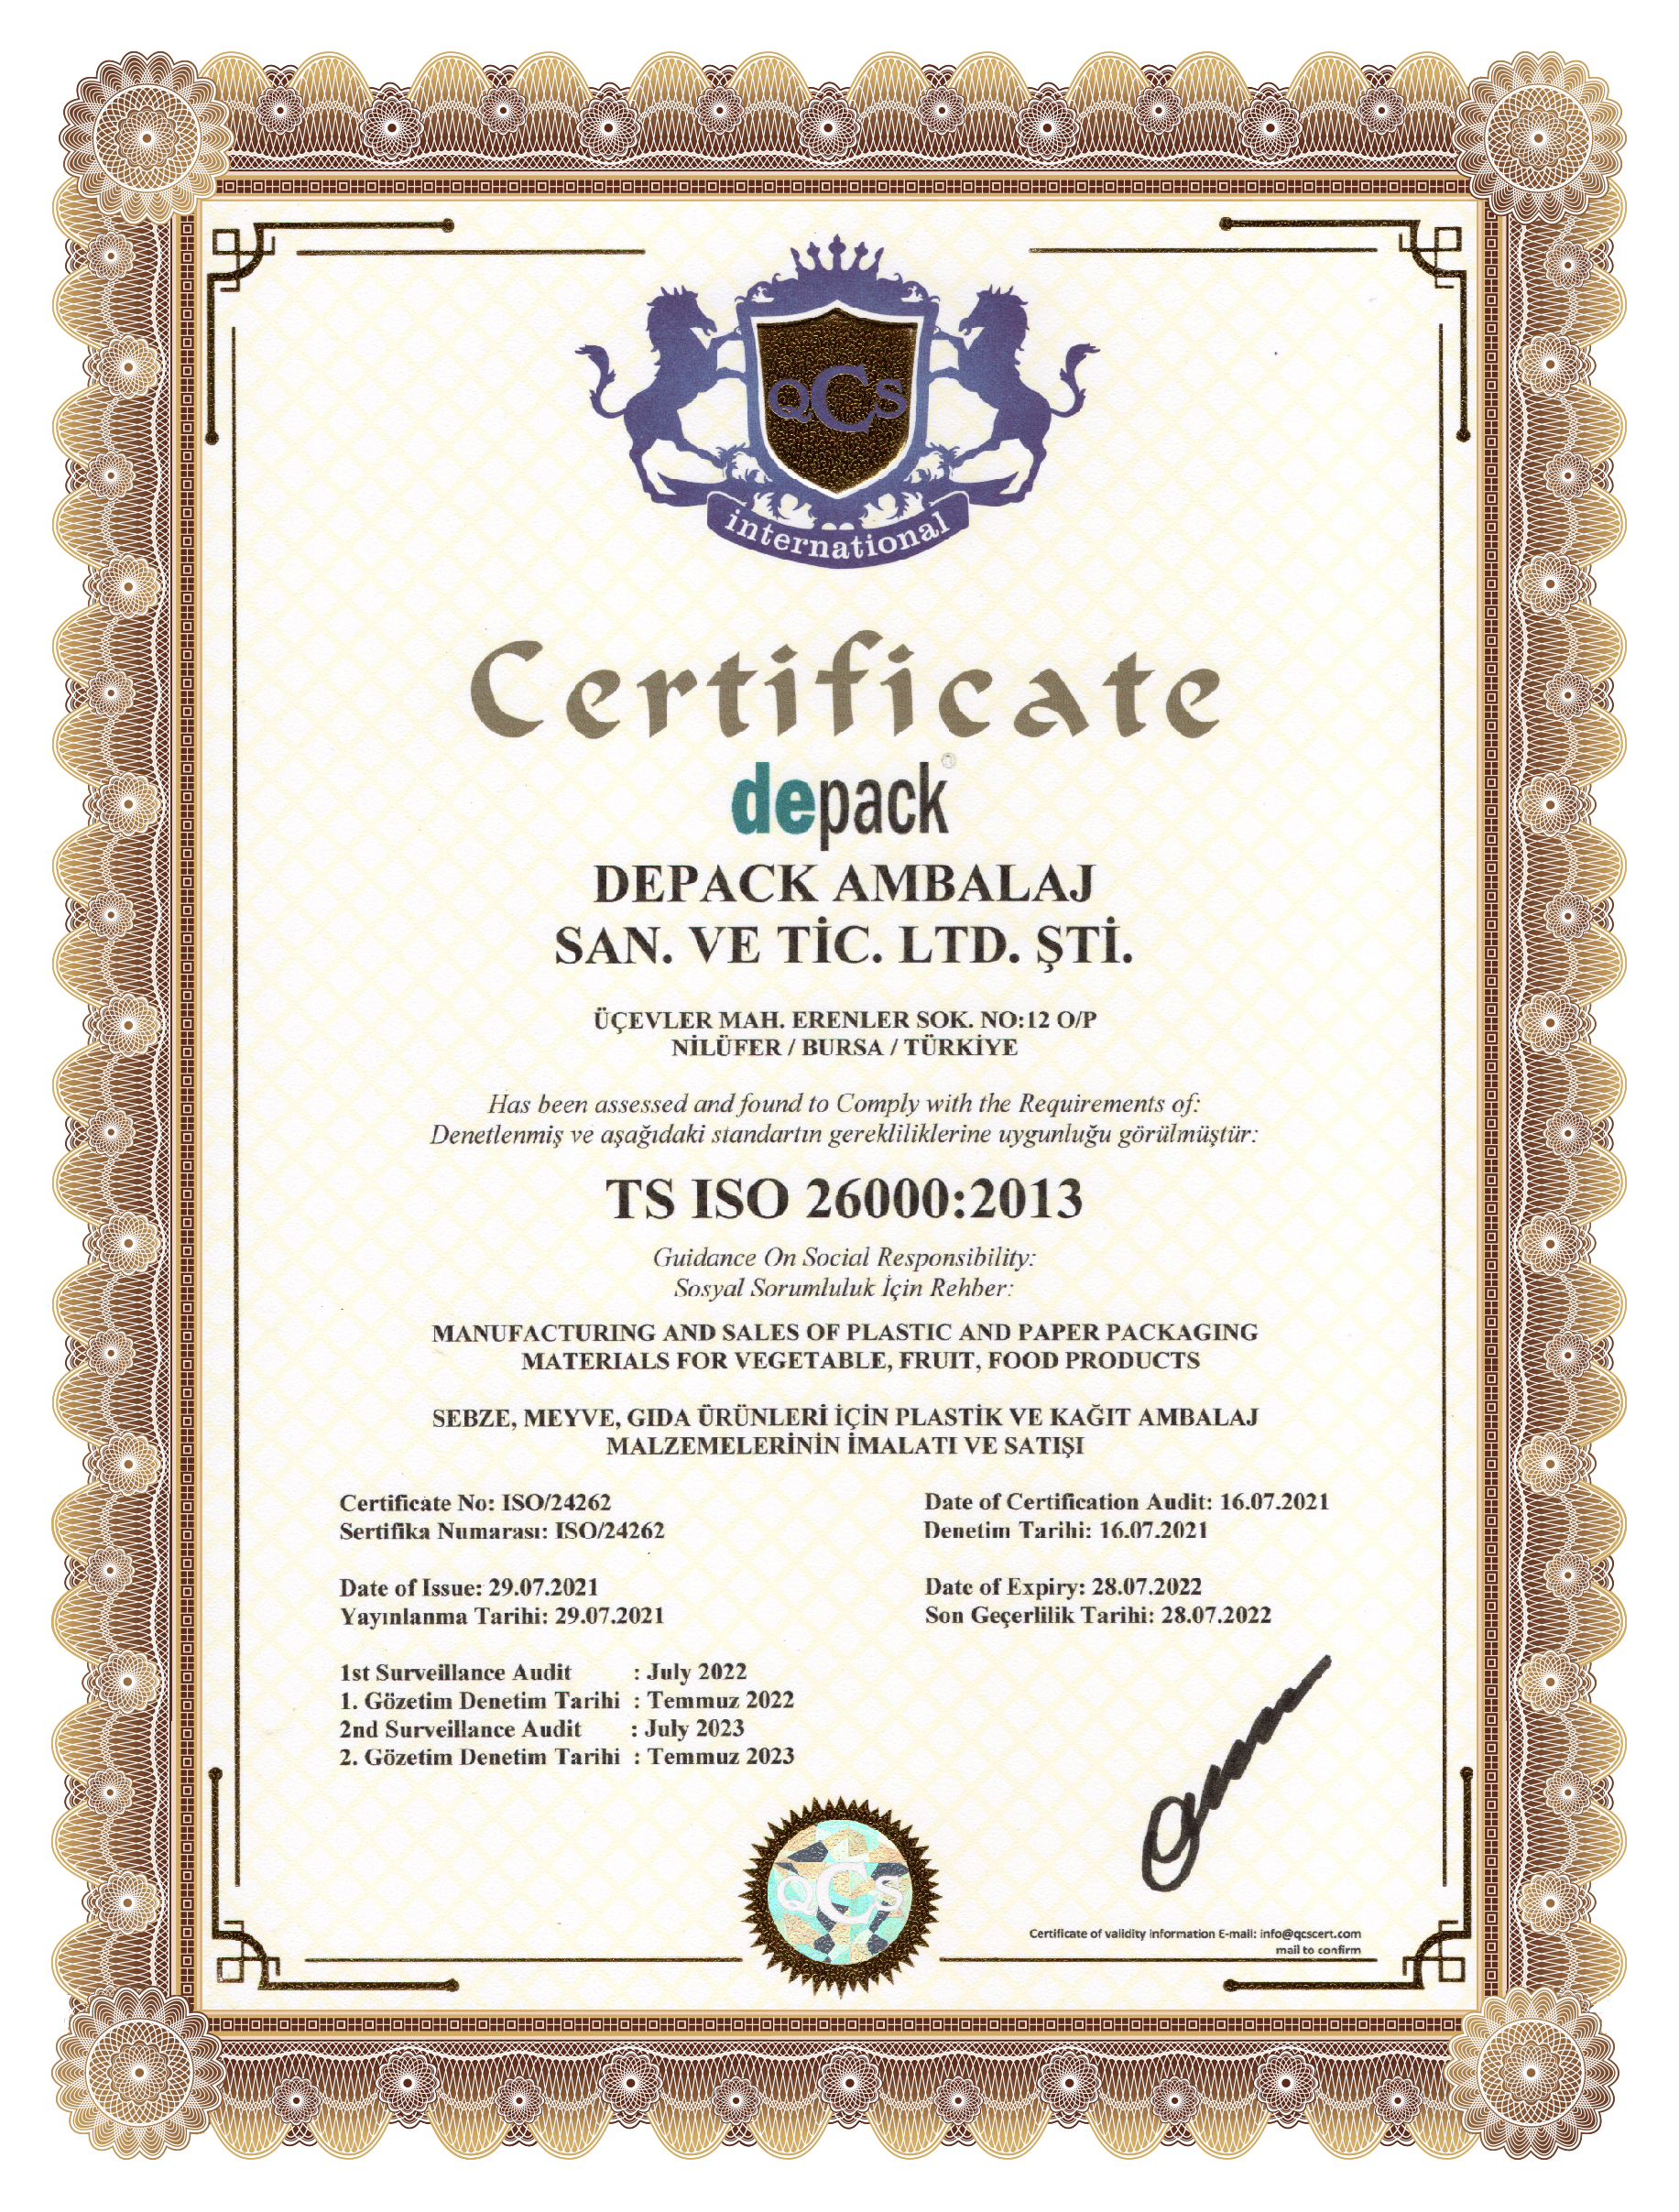 Depack TS ISO 26000:2013 Sertifikası